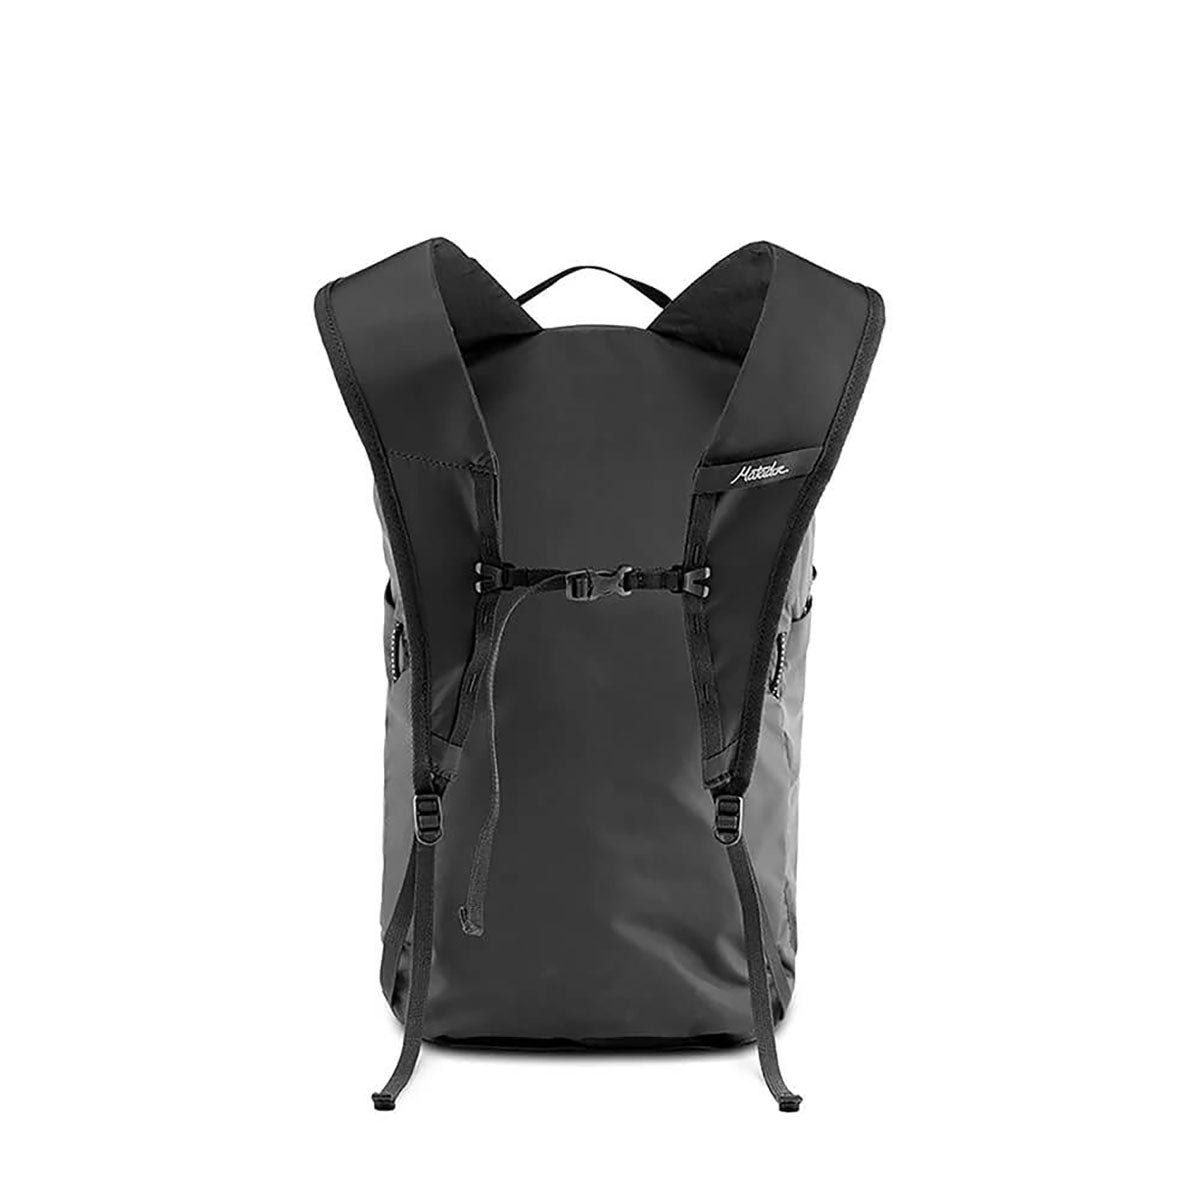 Matador Refraction Packable Backpack, Black